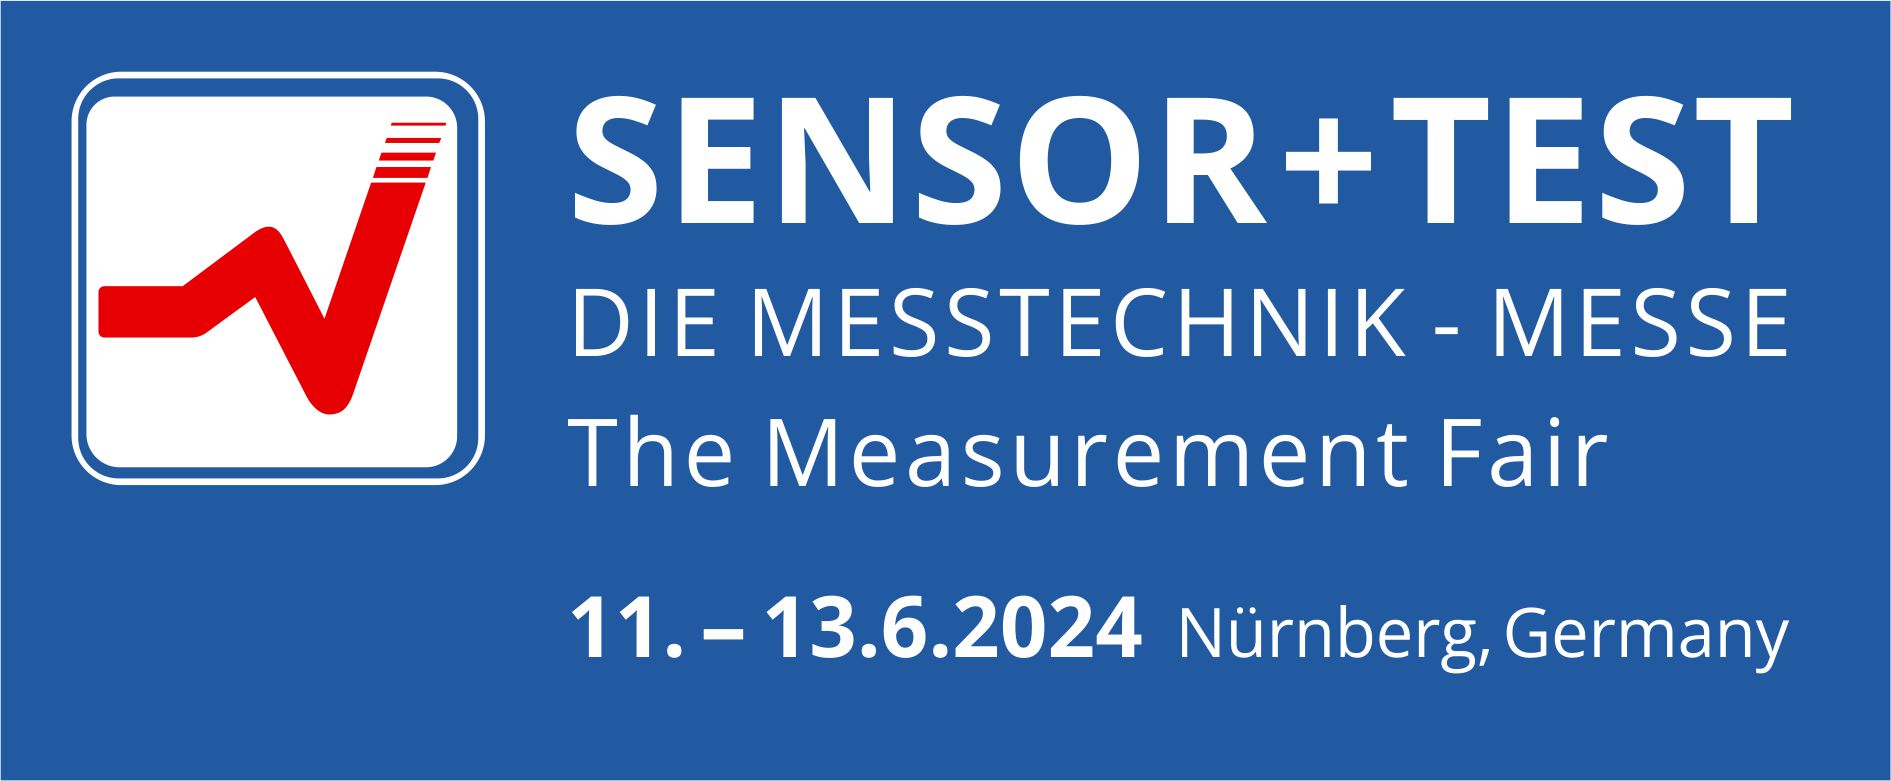 Fraunhofer IZM at the Measurement Fair SENSOR+TEST 2024